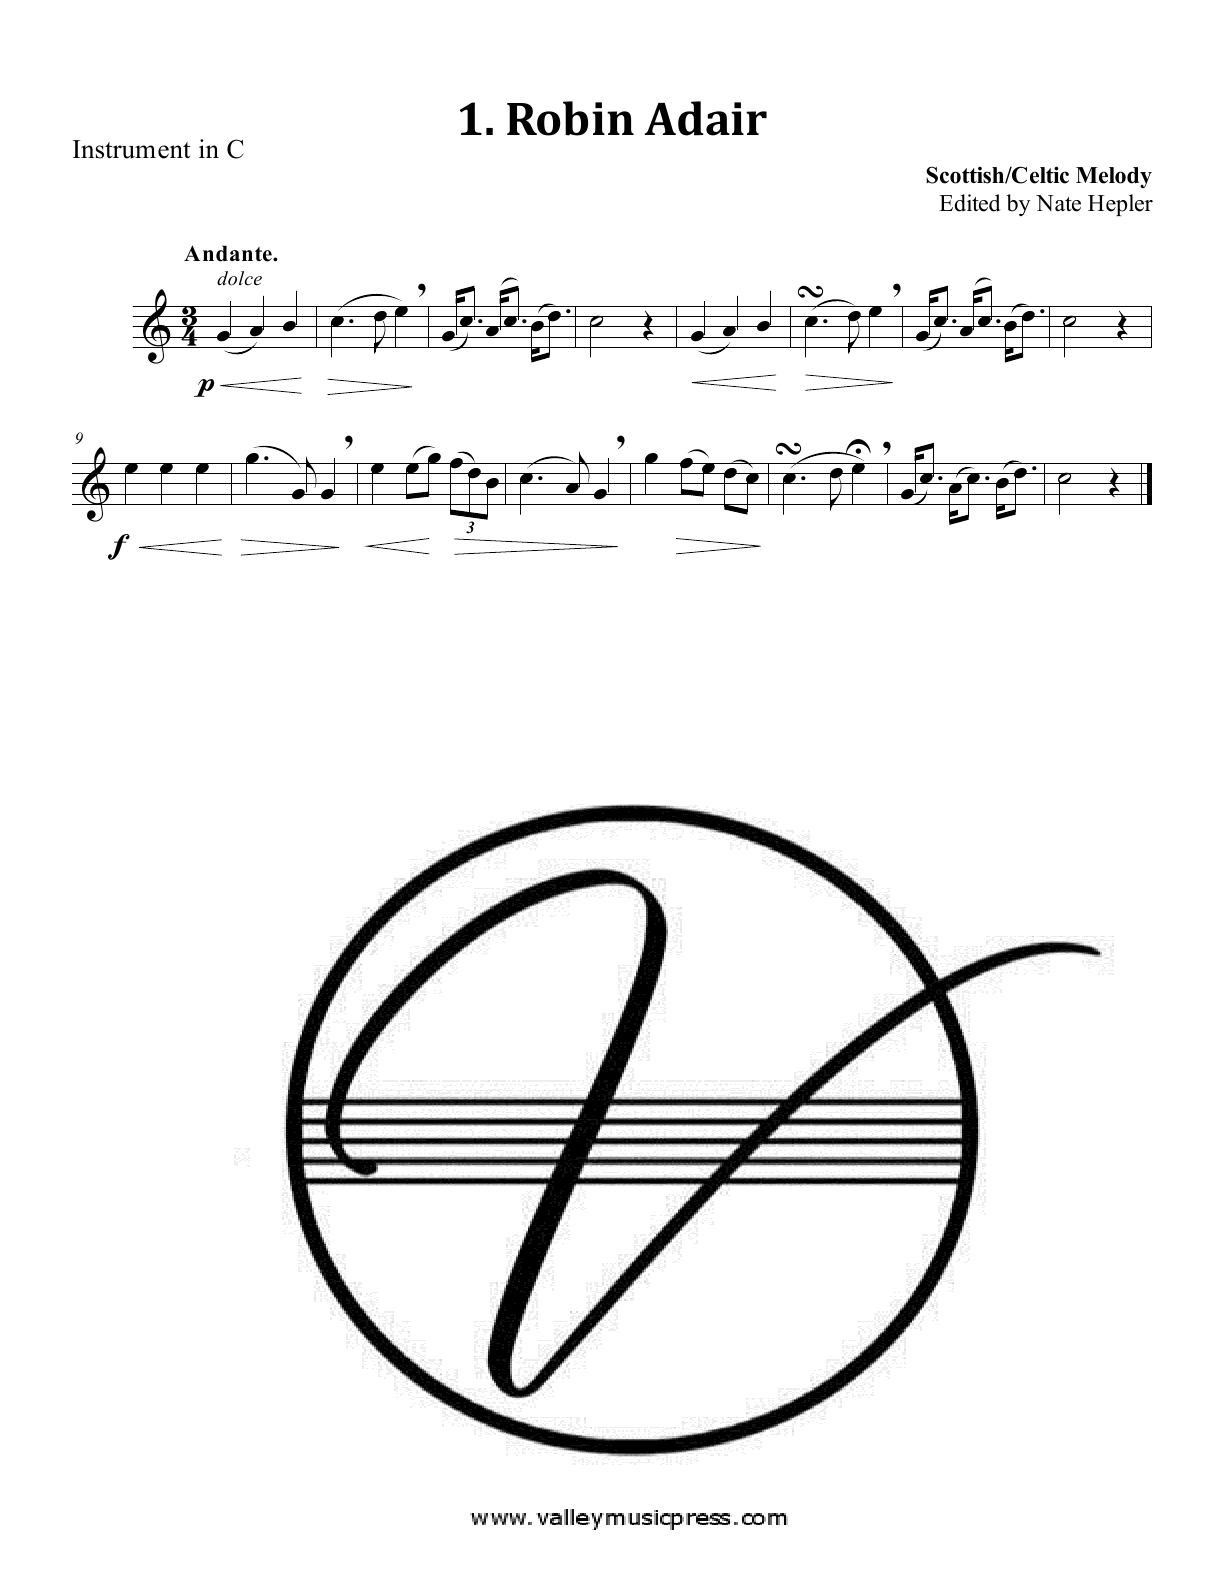 Arban Art of Phrasing Piano Accompaniment Vol. 1 No. 1-25 (C)